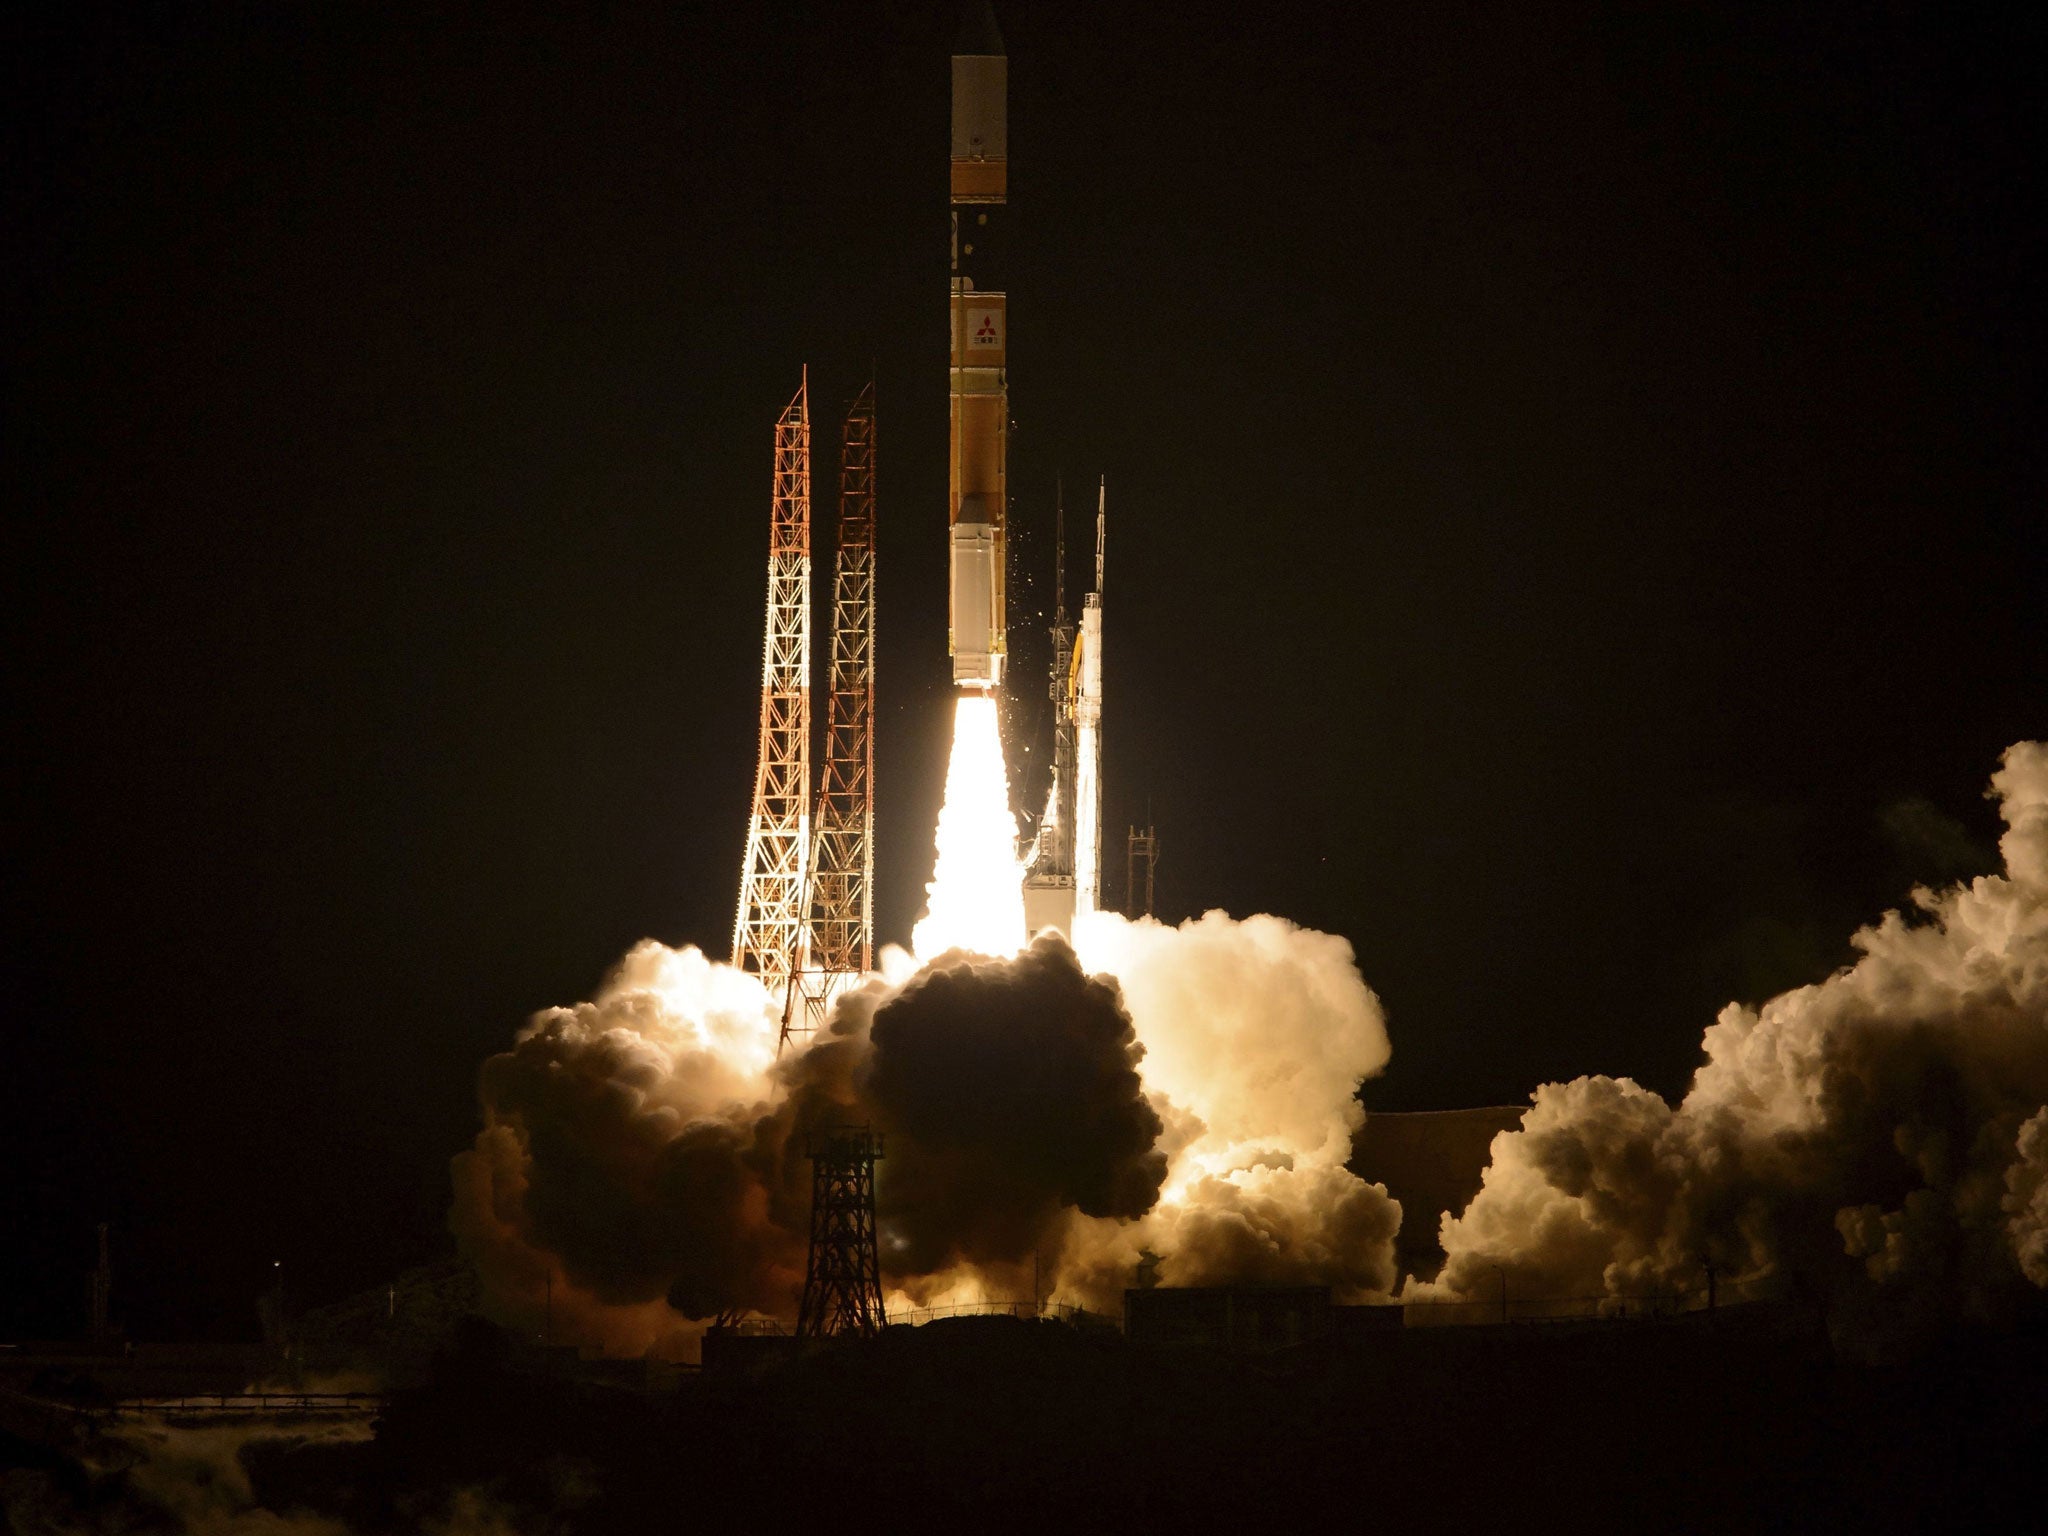 File image: A Japanese rocket launched by JAXA from the Tanegashima Space Center at Tanegashima, Japan